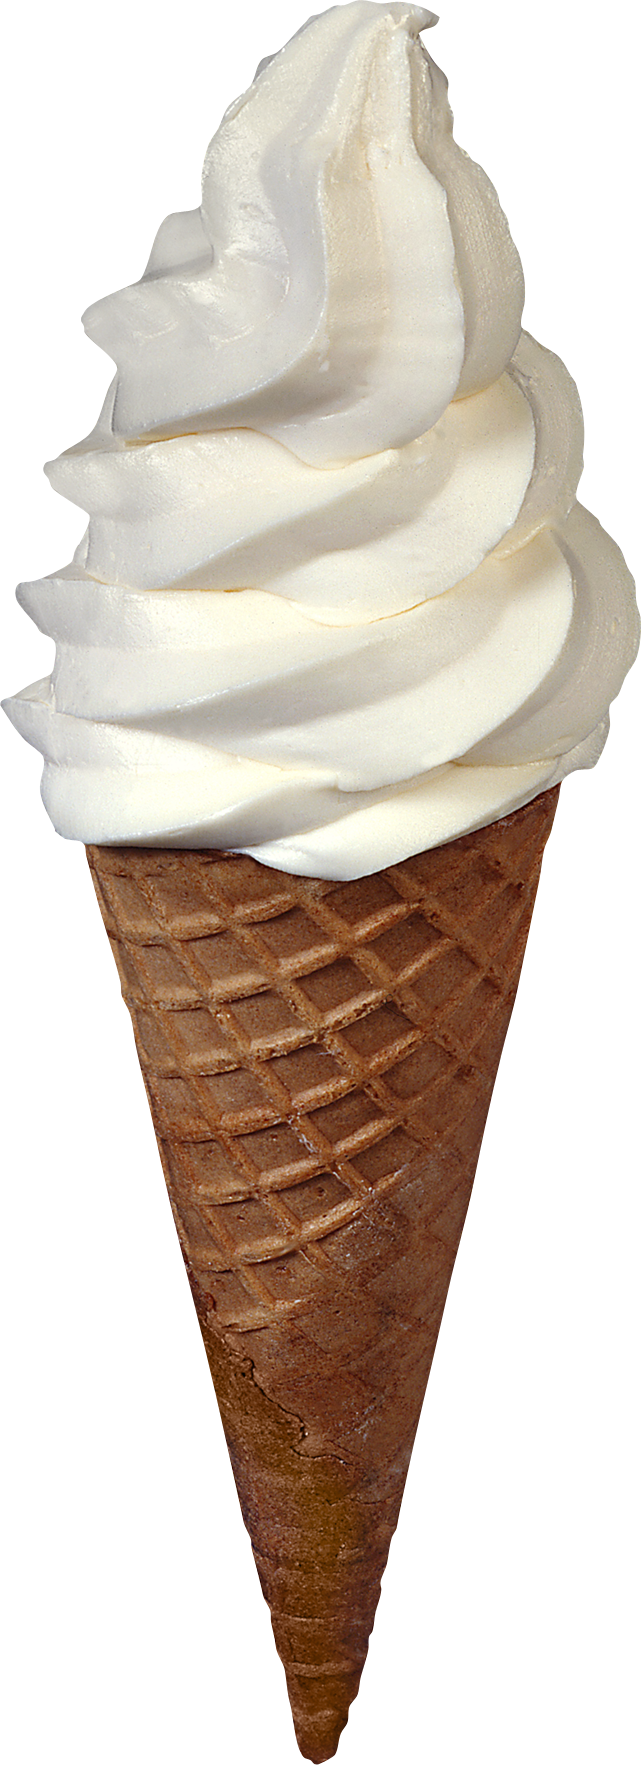 White Ice Cream Cone PNG Image